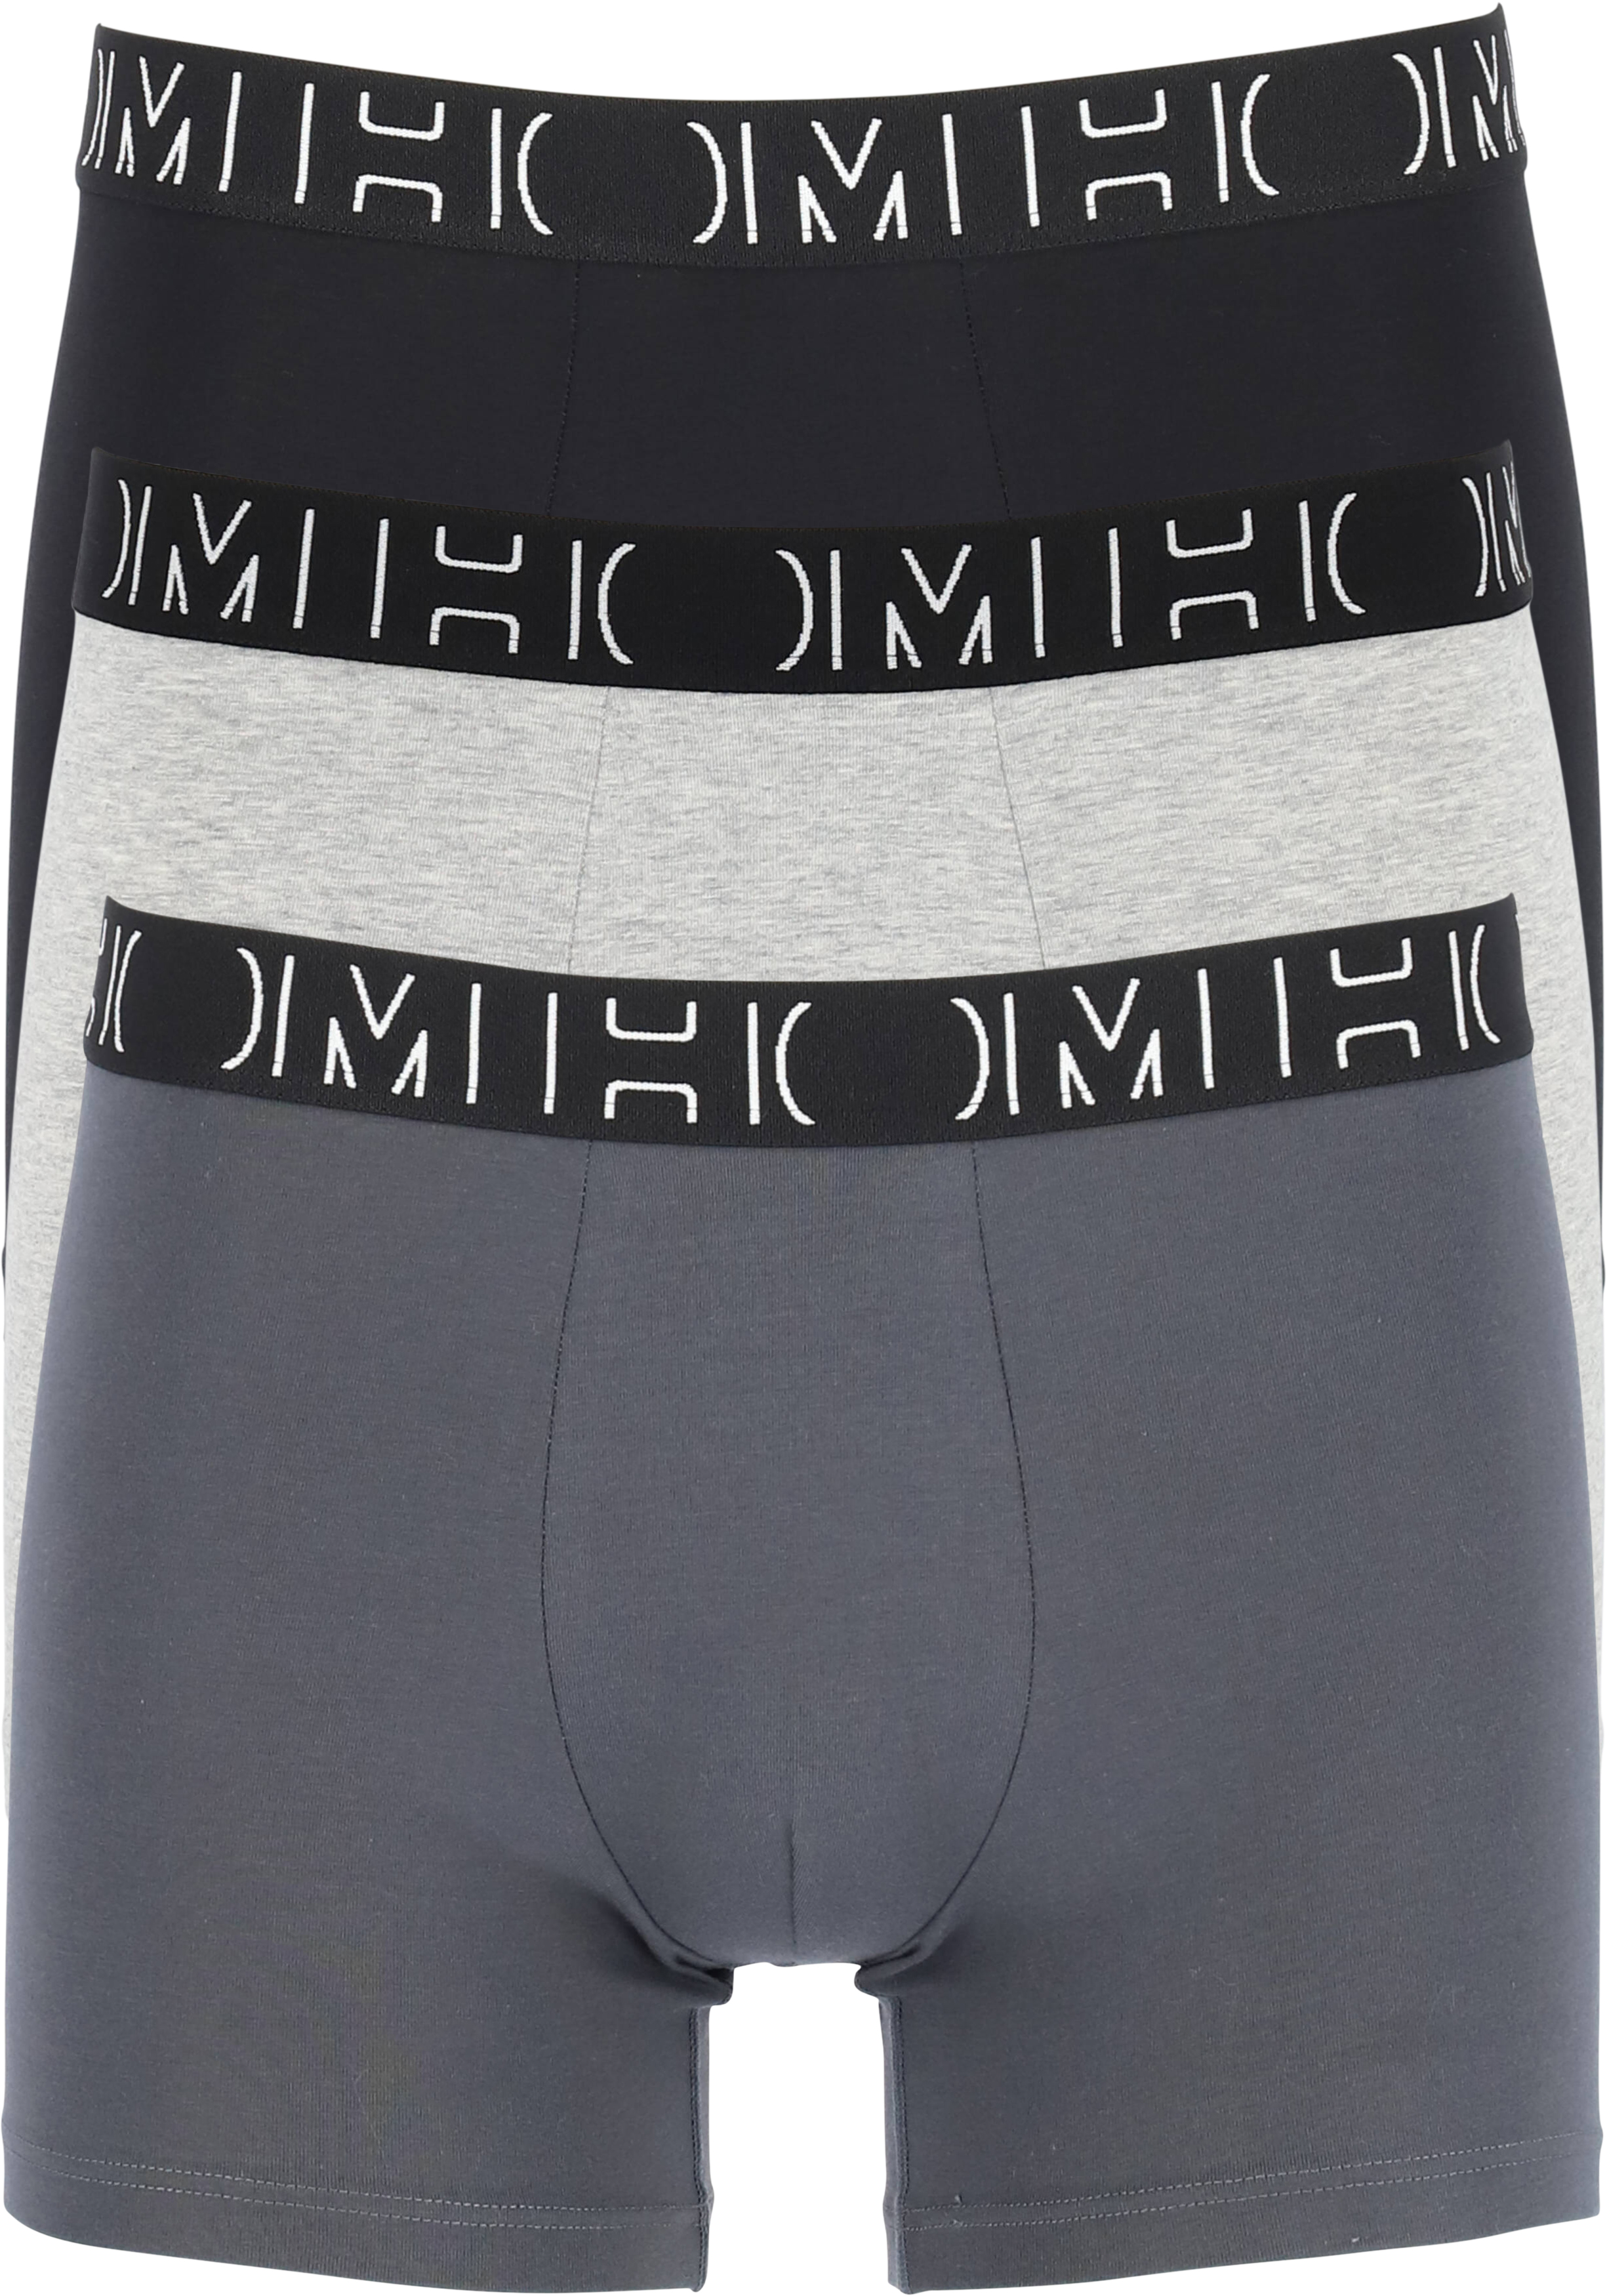 HOM Patrick #2 long boxer briefs (3-pack), heren boxers normale lengte, zwart, grijs, grijs